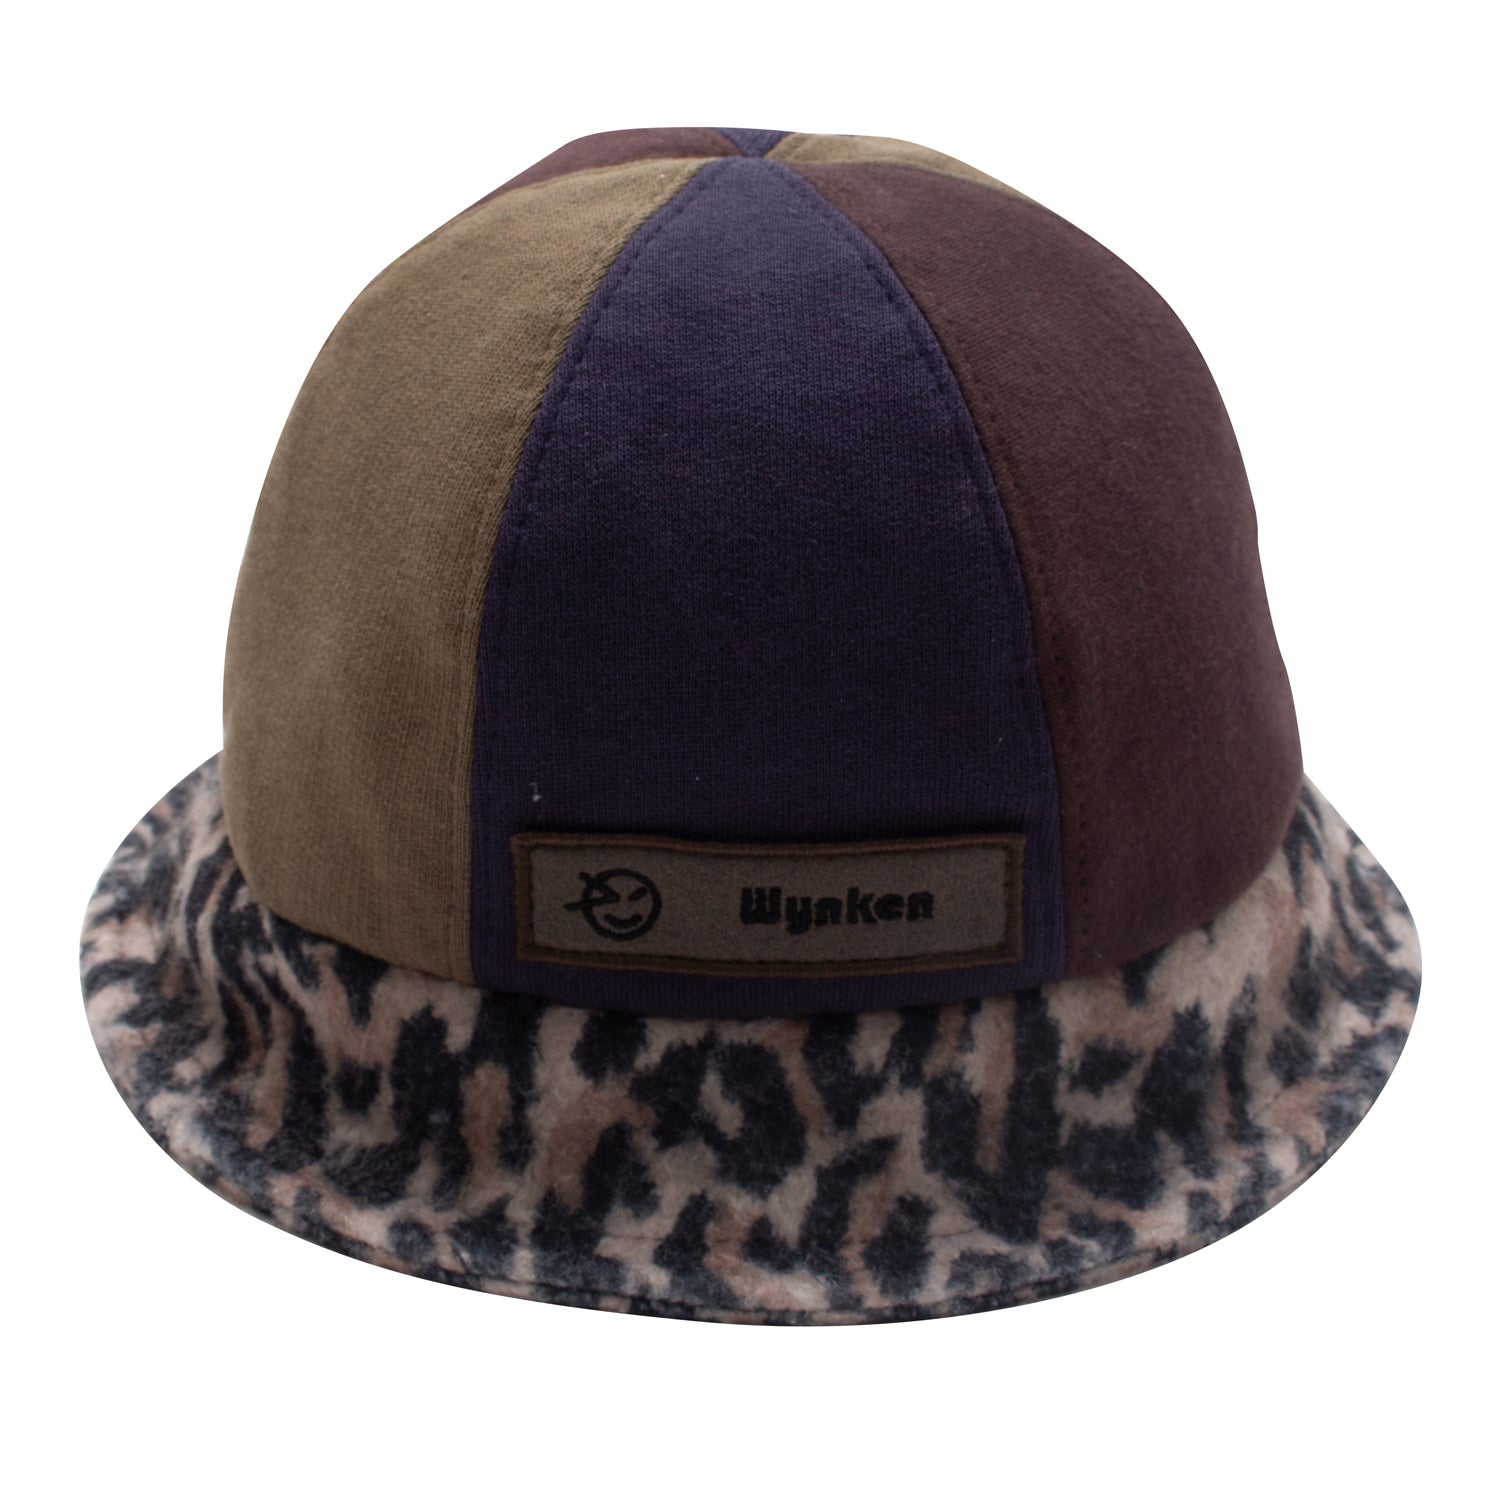 Boys & Girls Brown Bucket Hat